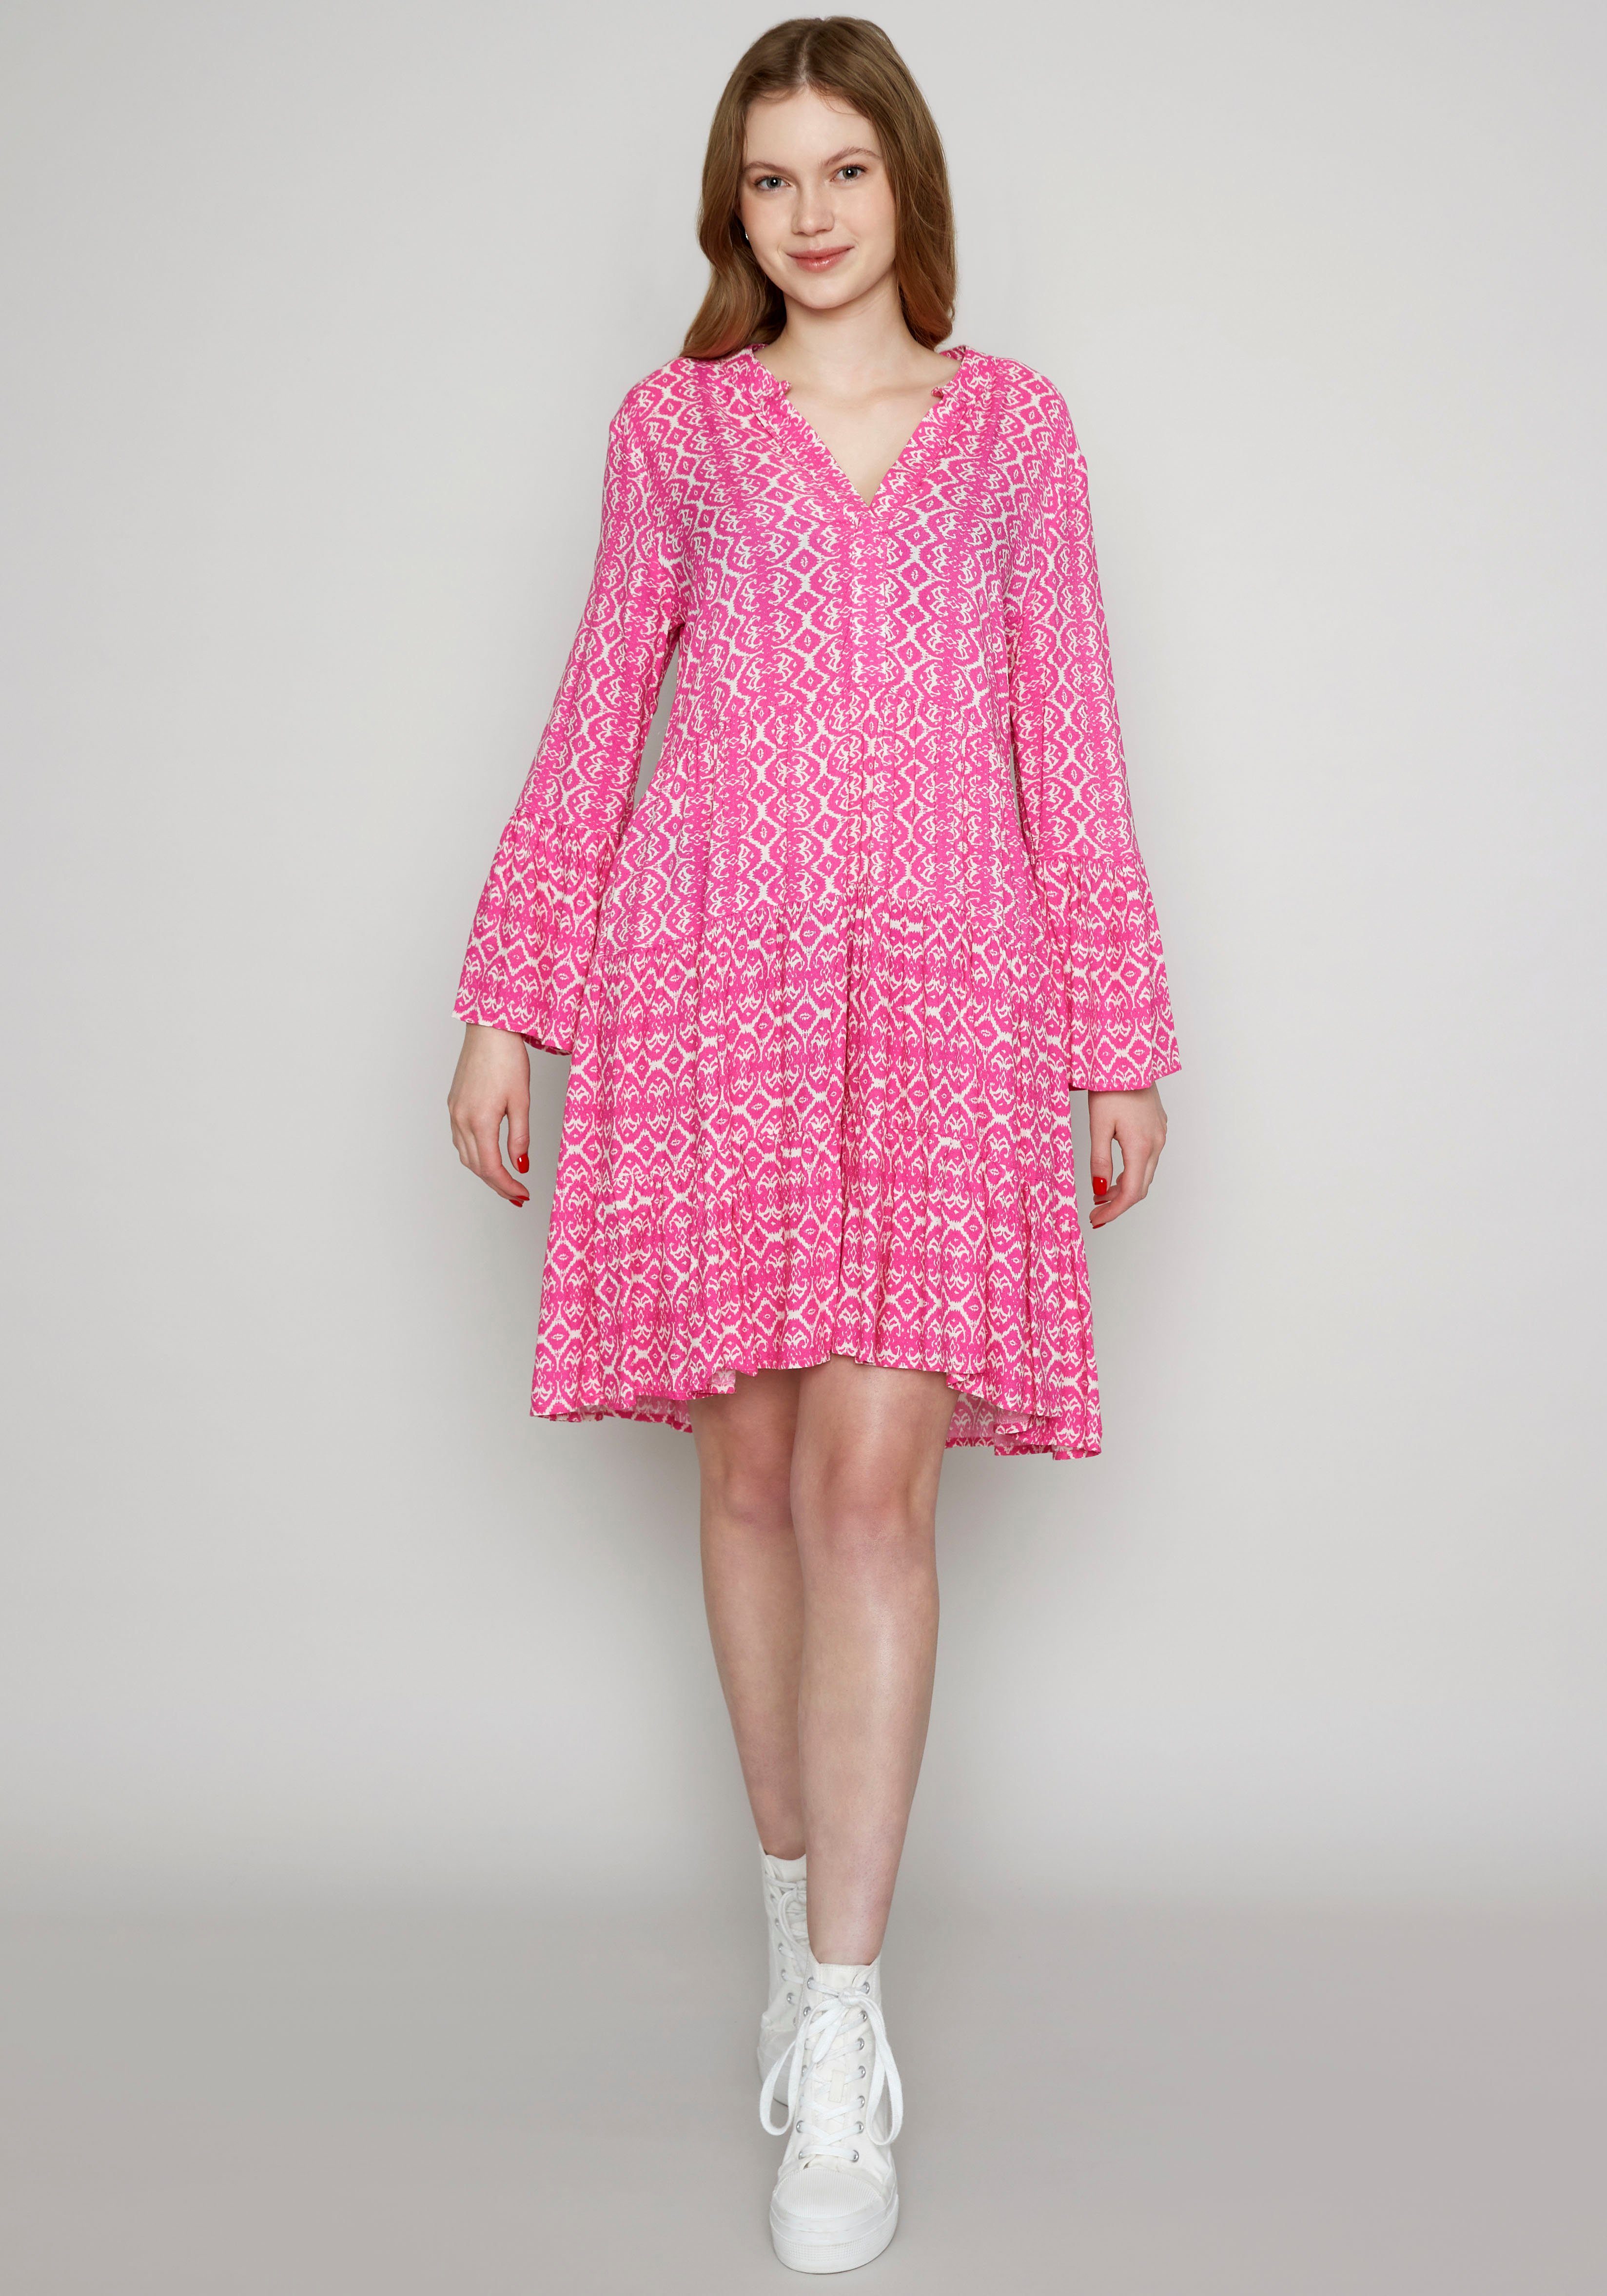 ZABAIONE Sommerkleid Dress Me44lika mit Volant im Tunika Style, In schöner  Passform, perfekt für warme Tage